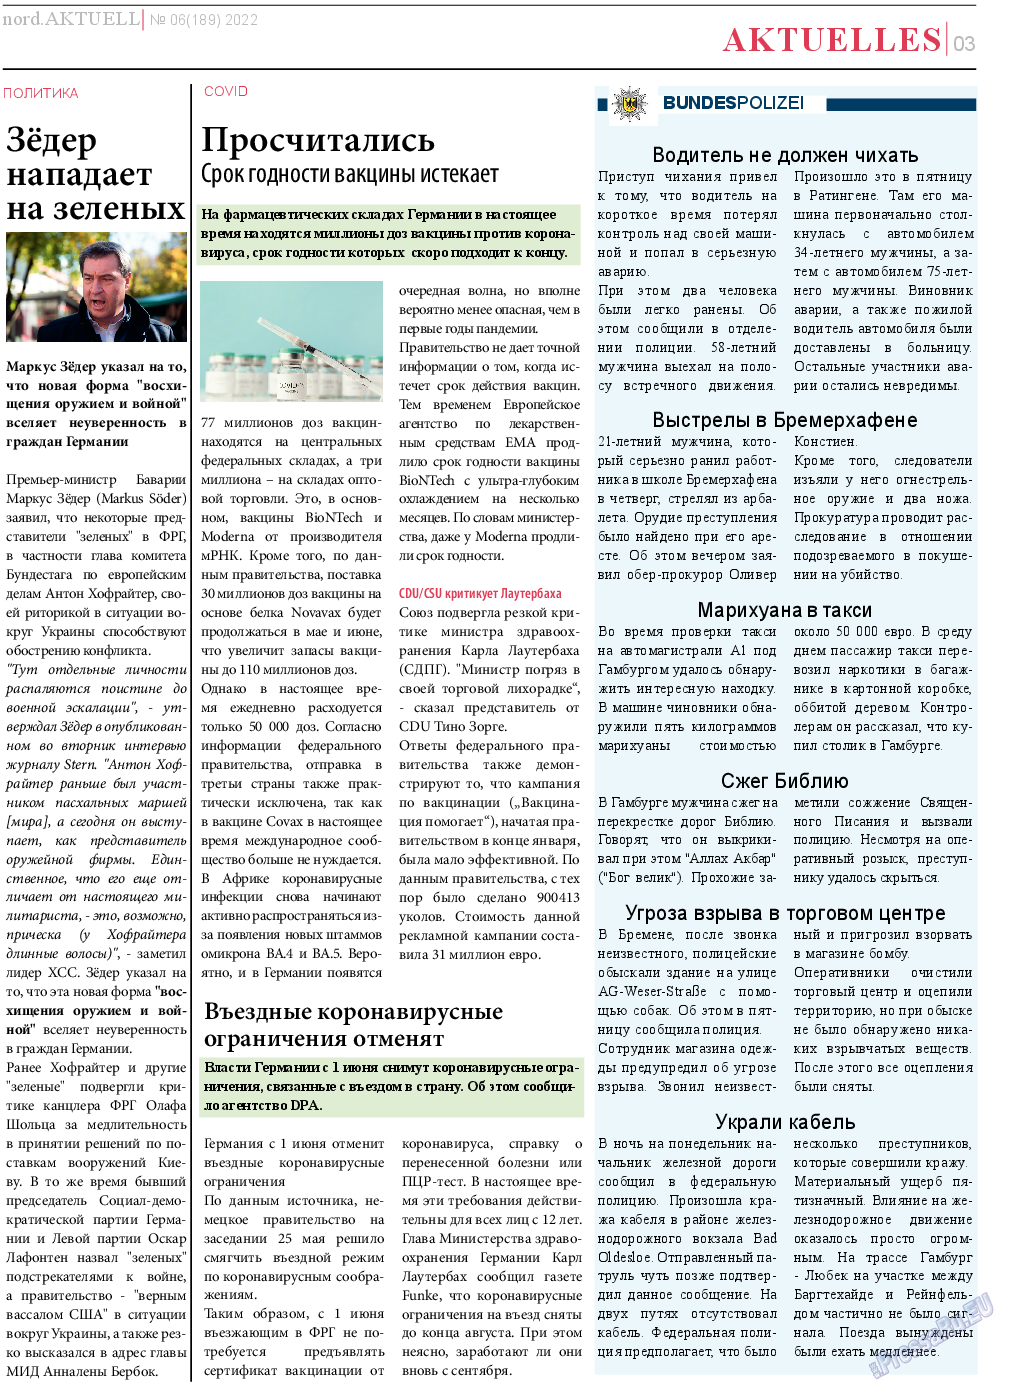 nord.Aktuell, газета. 2022 №6 стр.3